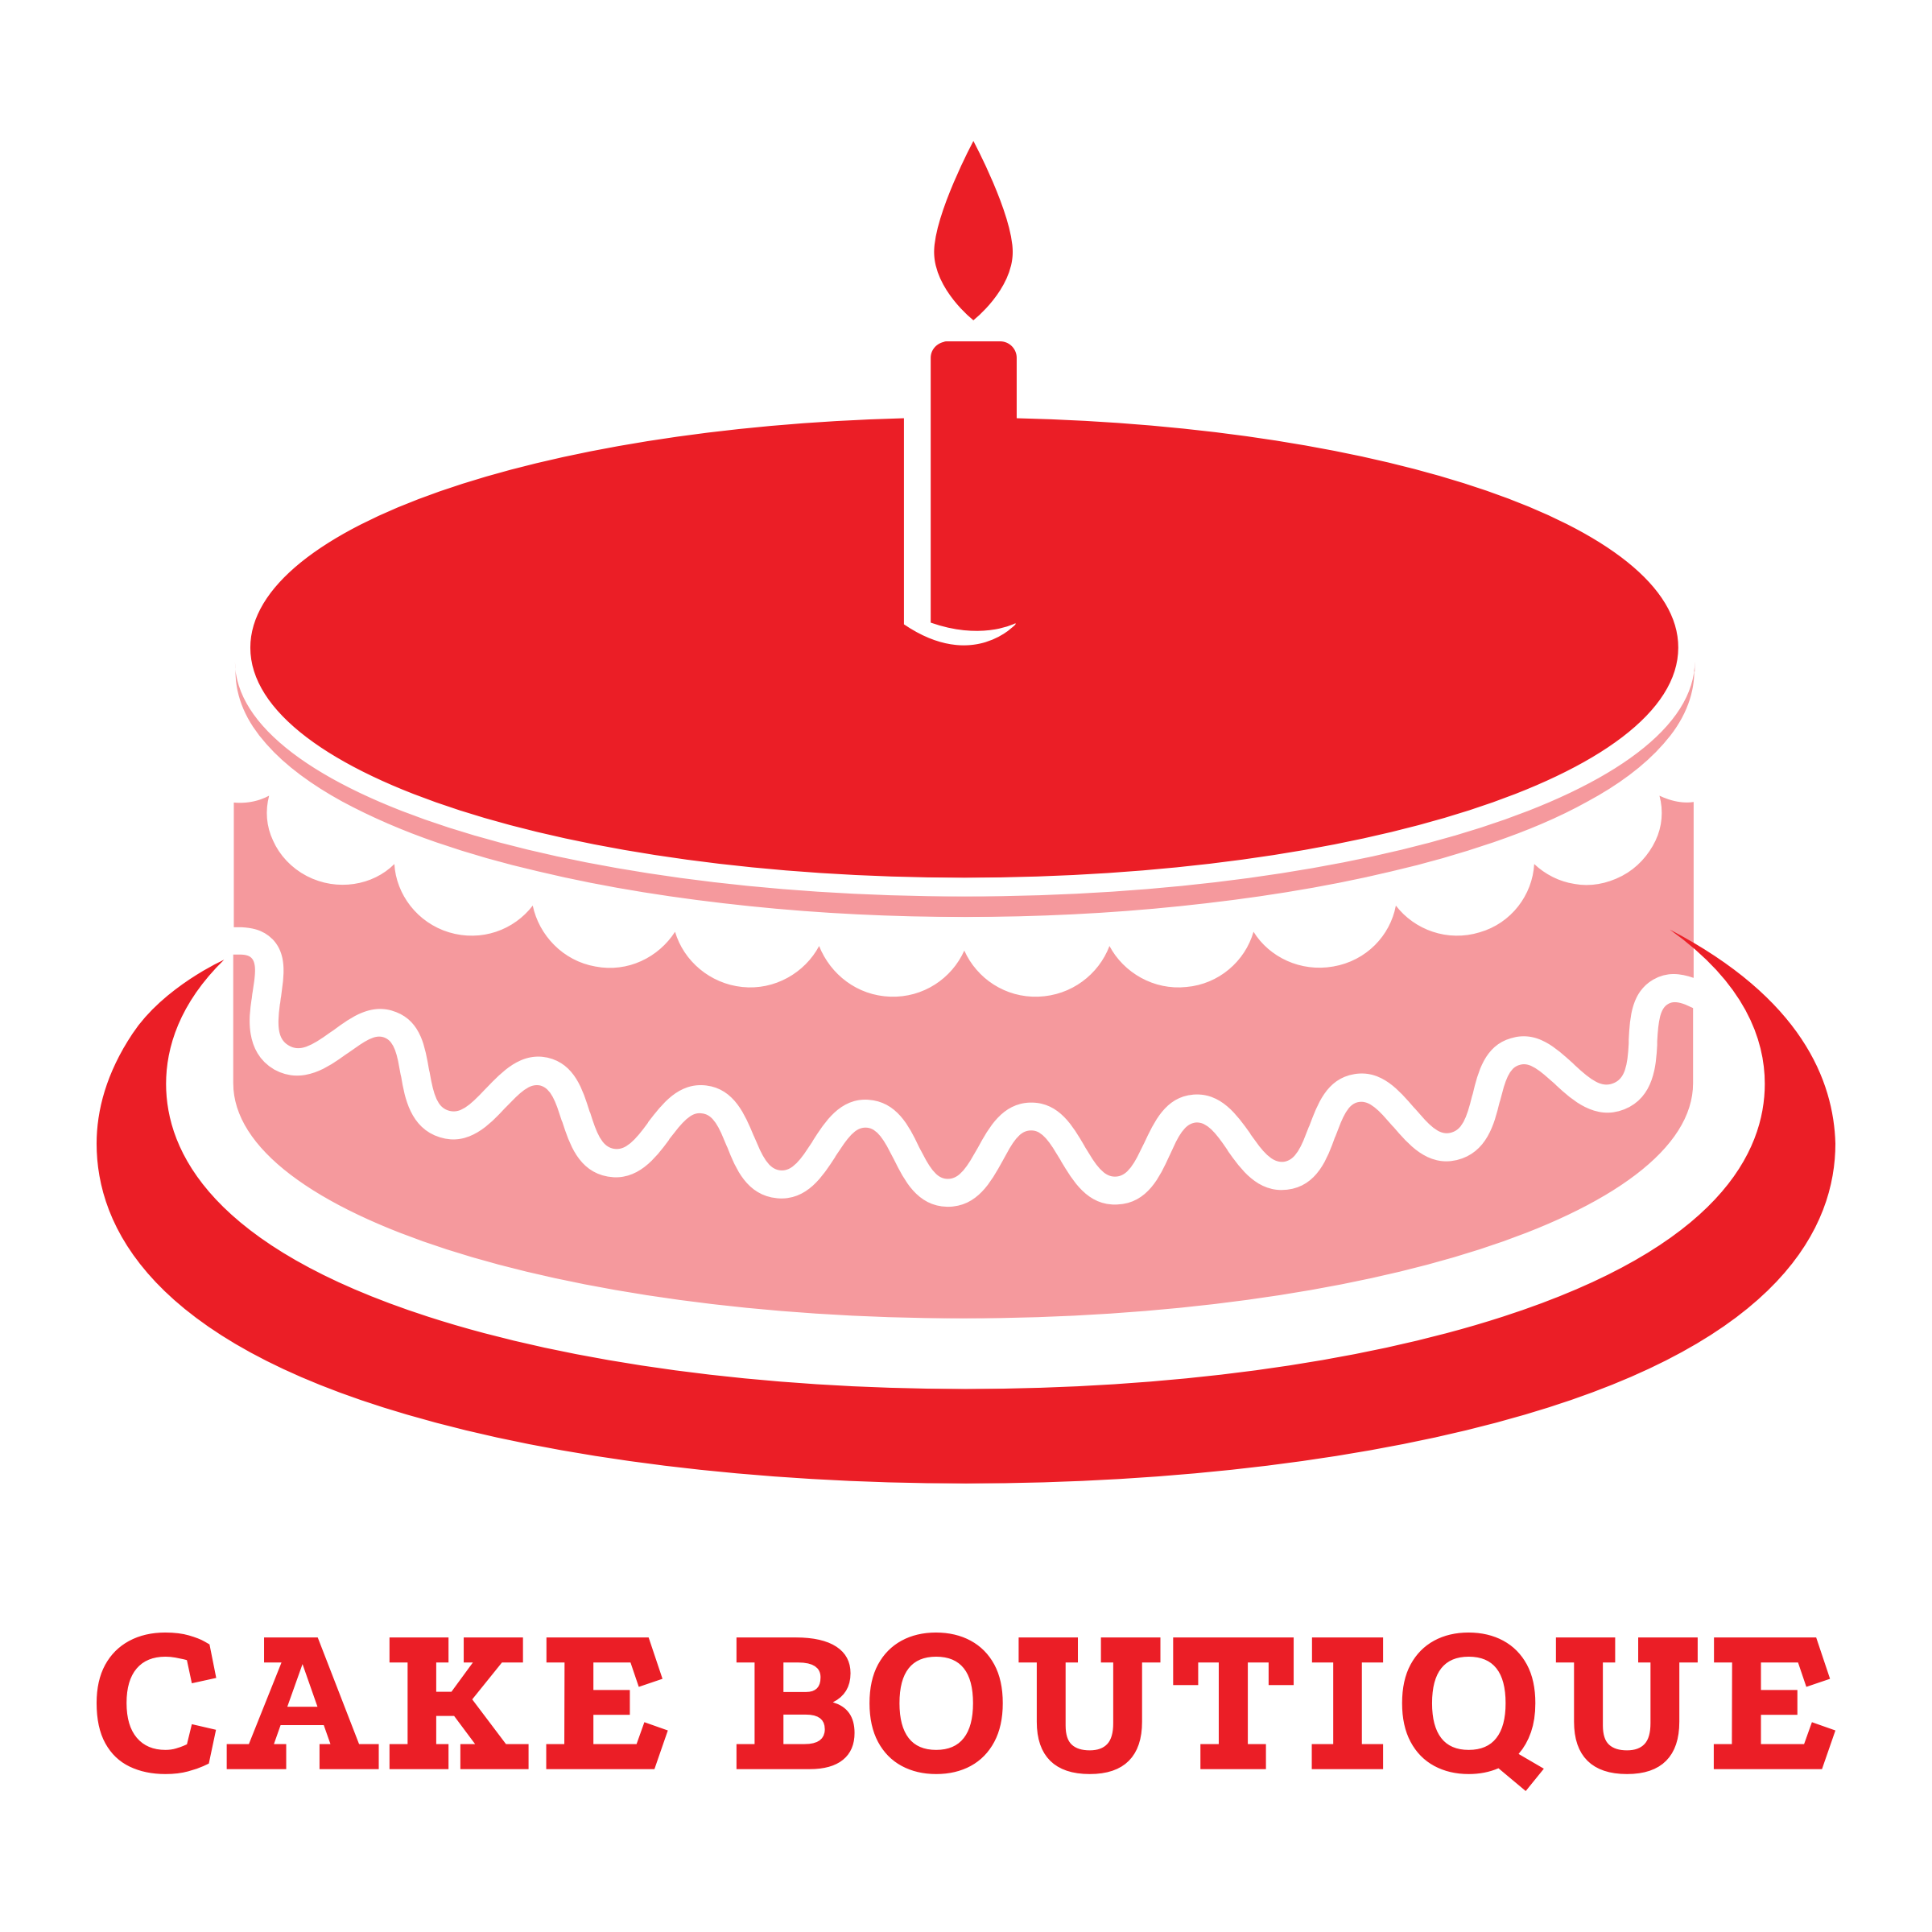 Customize 998+ Cake Logo Templates Online - Canva